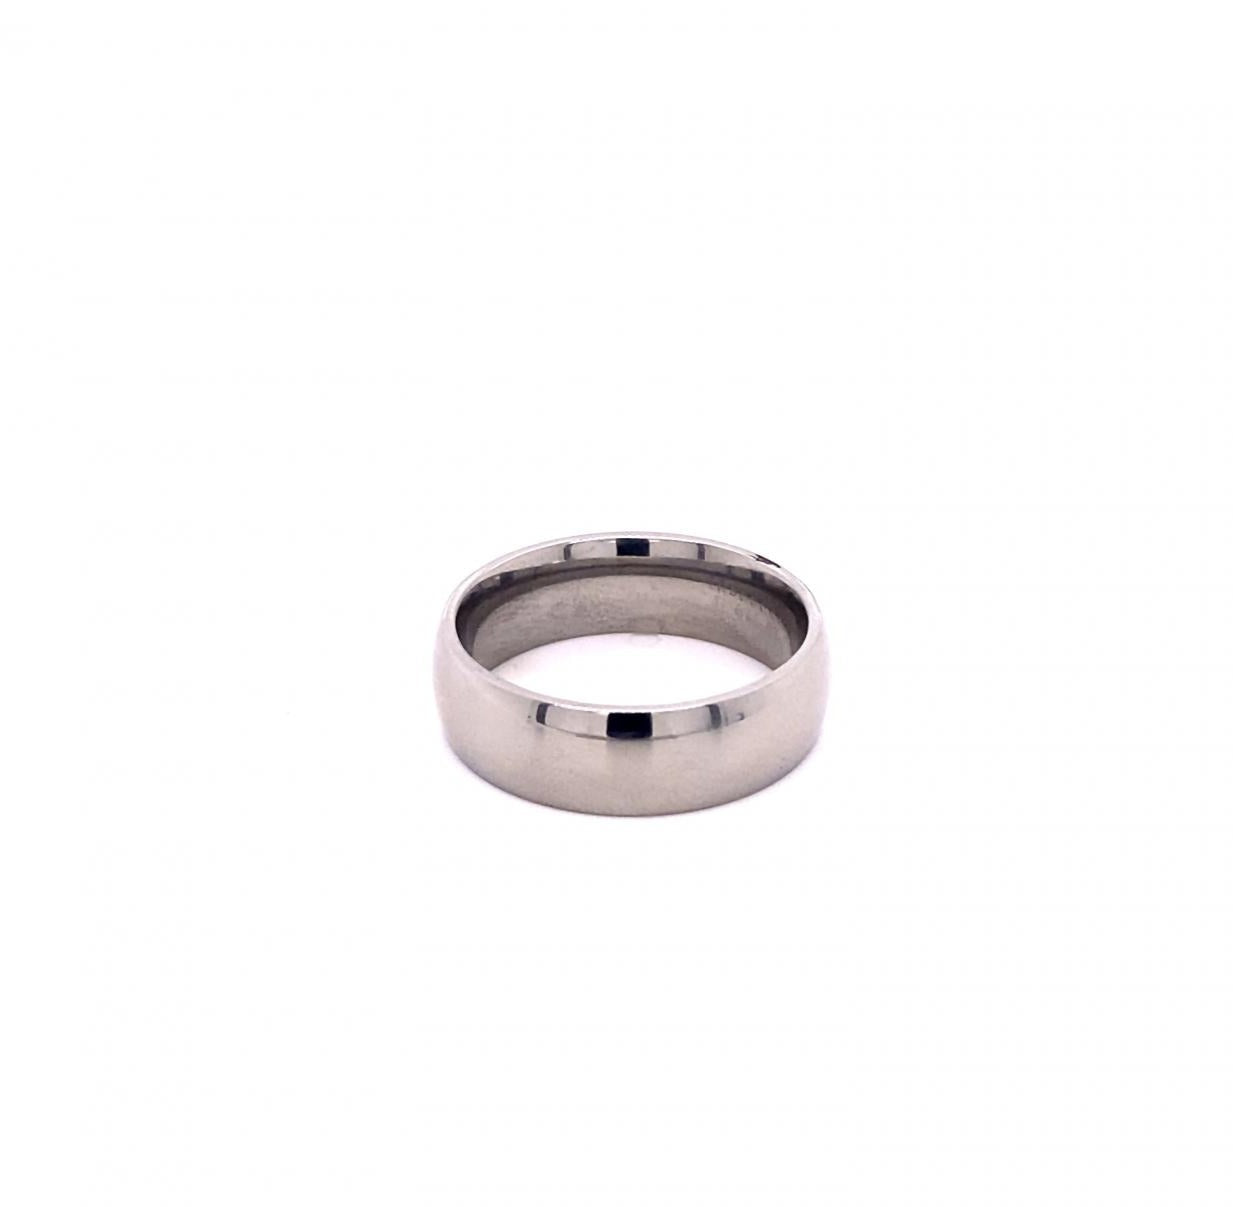 Men's Light Weight Titanium Engagement Band Ring Size 9.75